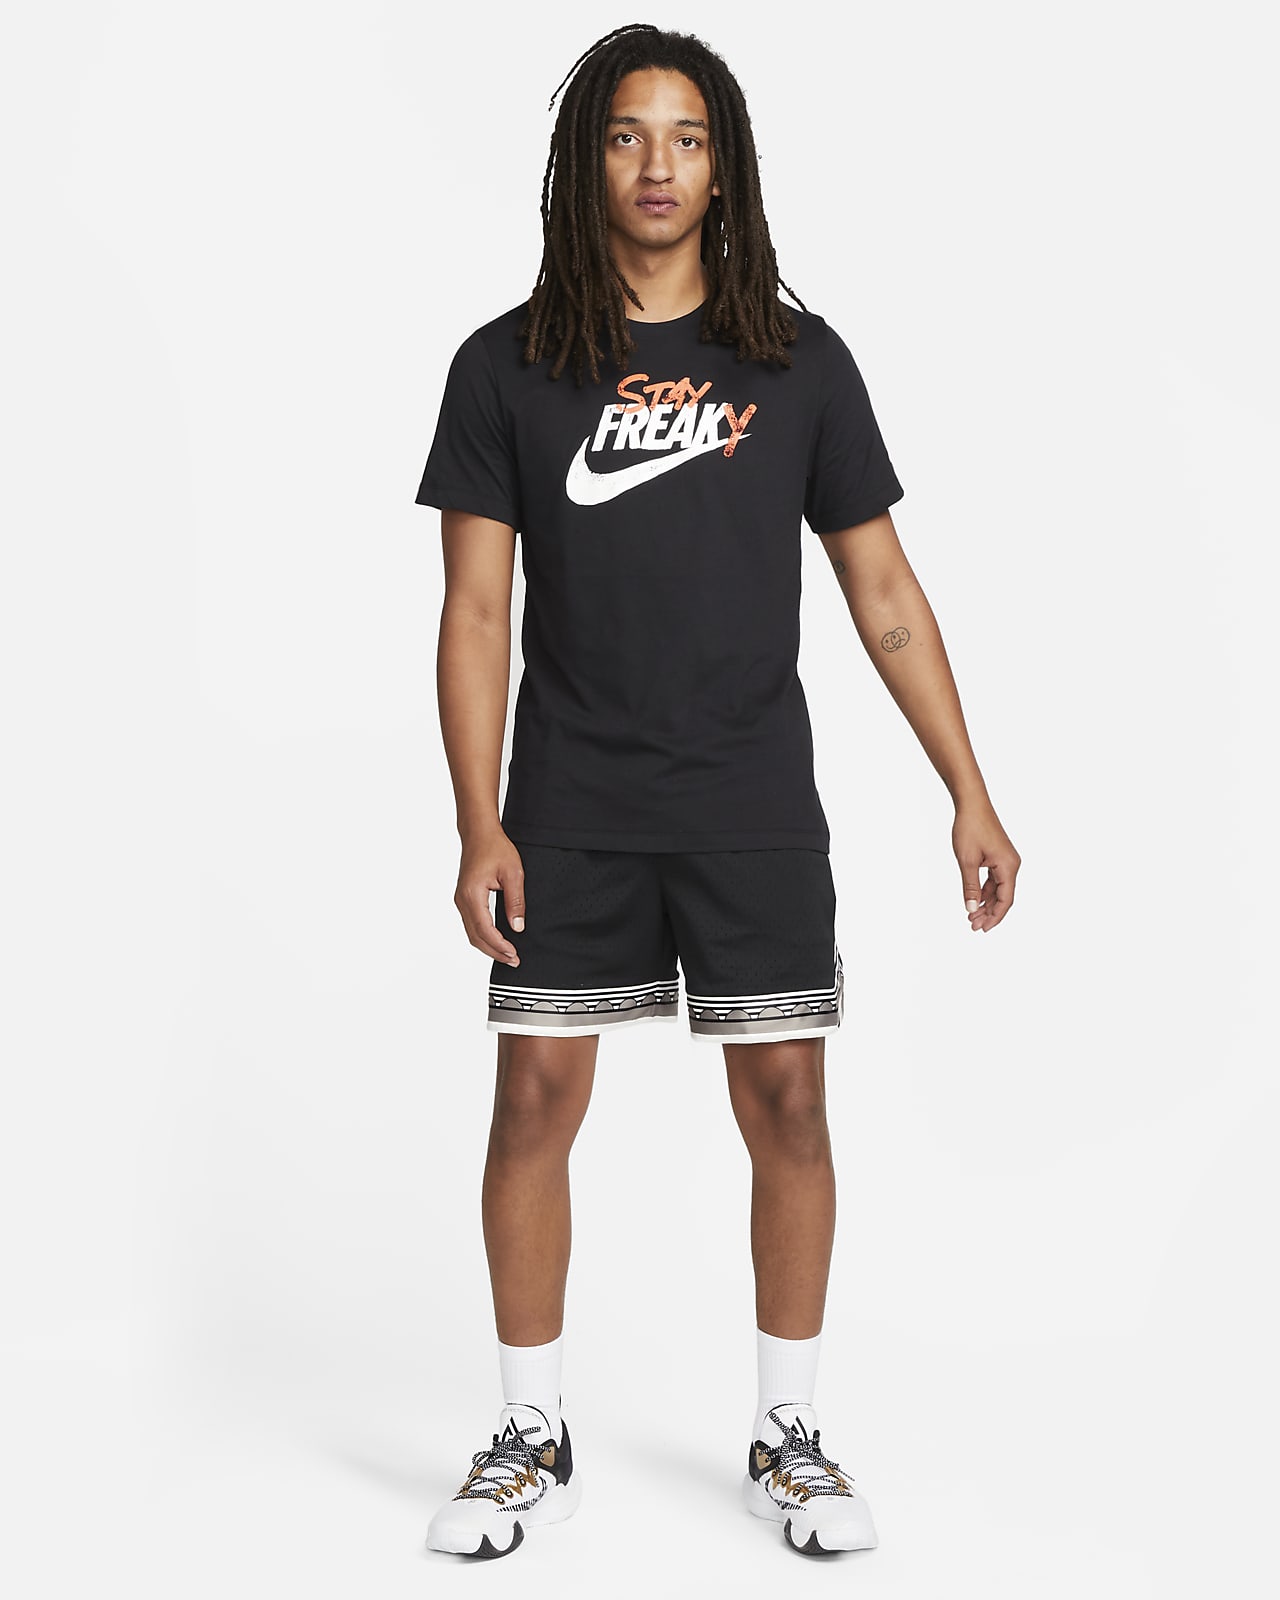 Men's Nike Dri-FIT Giannis Freak Basketball Tee